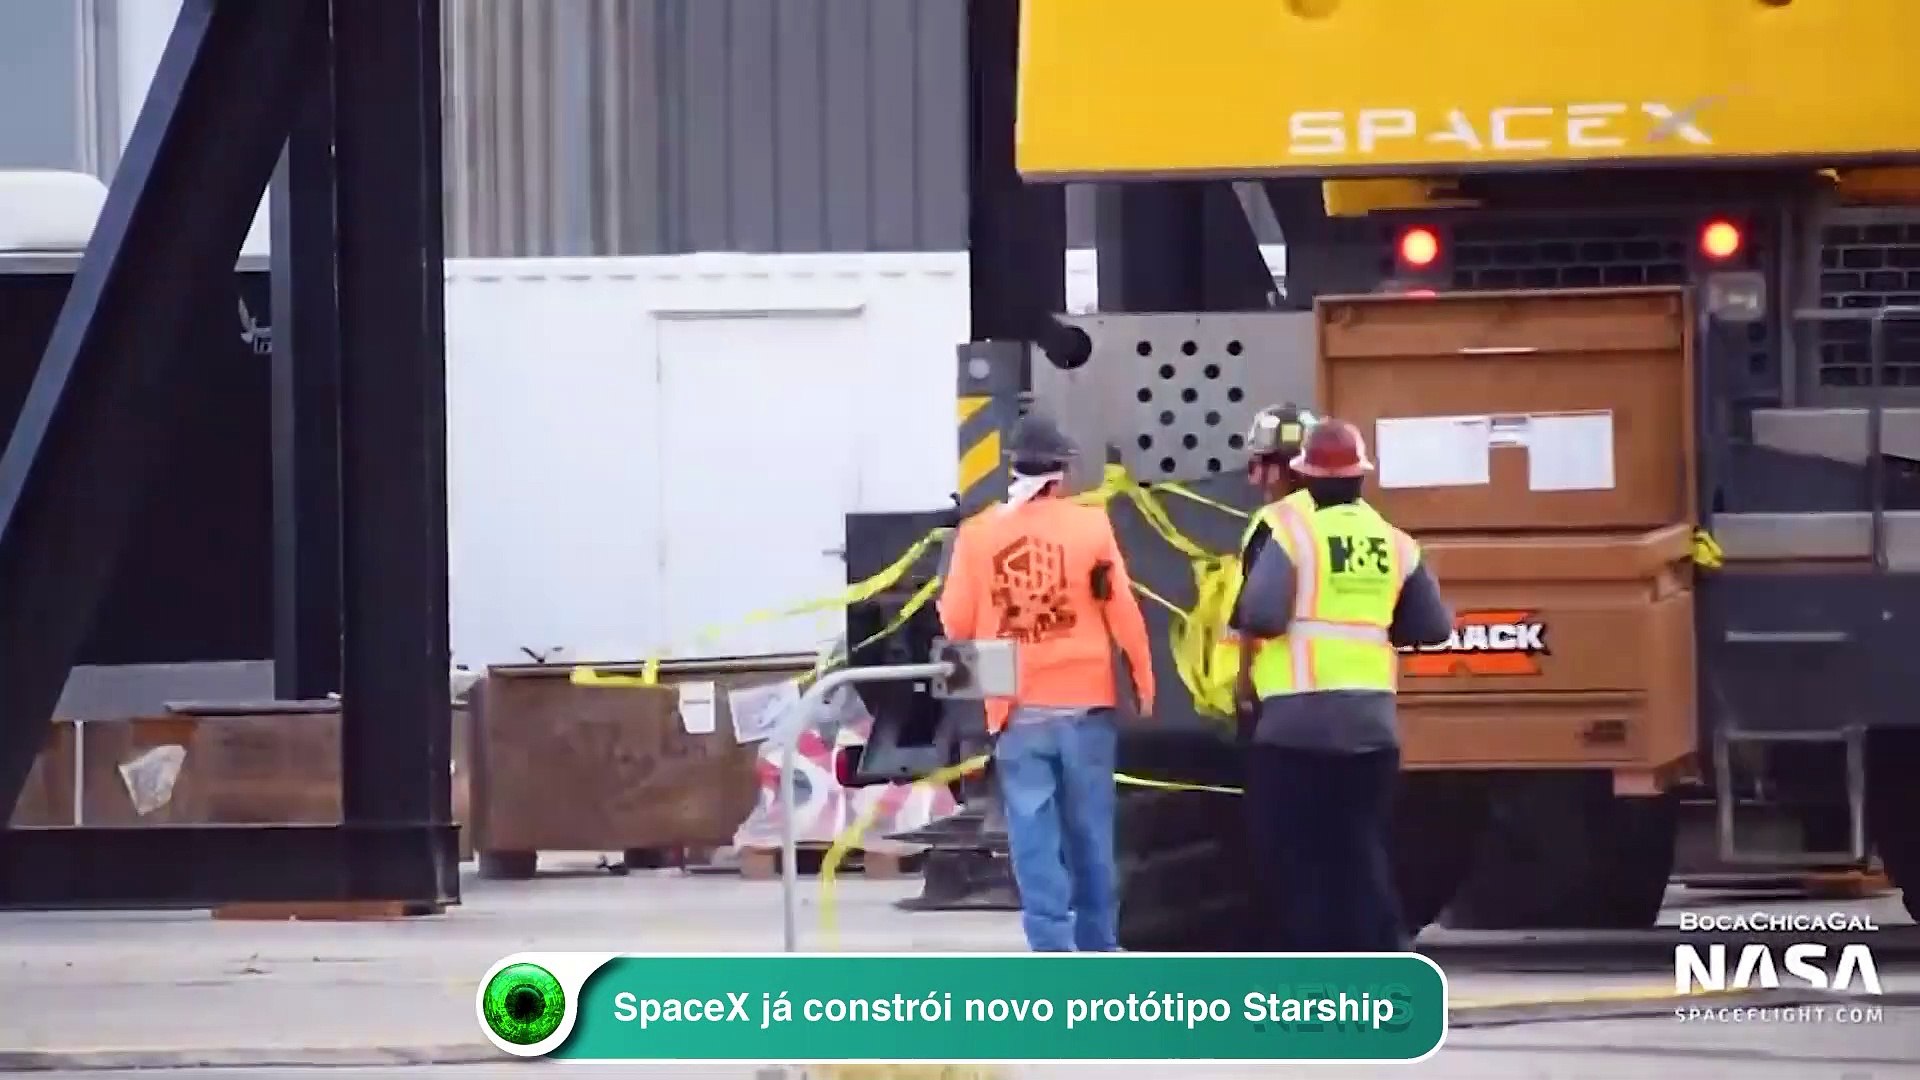 SpaceX já constrói novo protótipo Starship